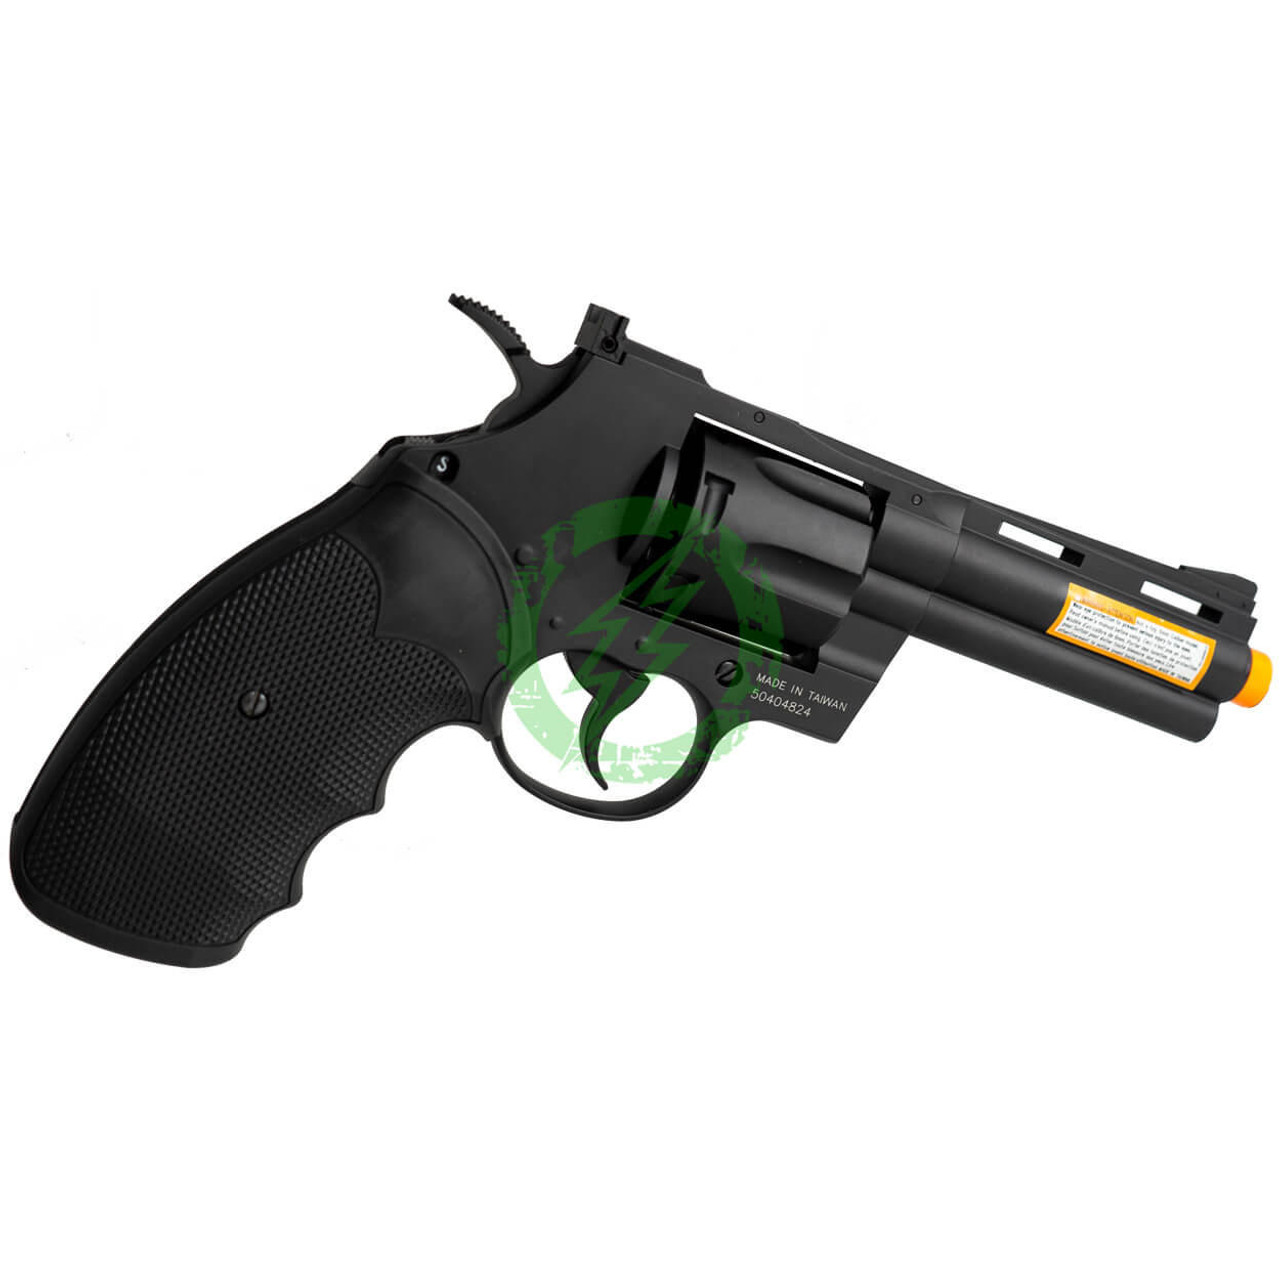  Cybergun Colt Python Full Metal .357 Magnum High Power Airsoft CO2 Revolver 